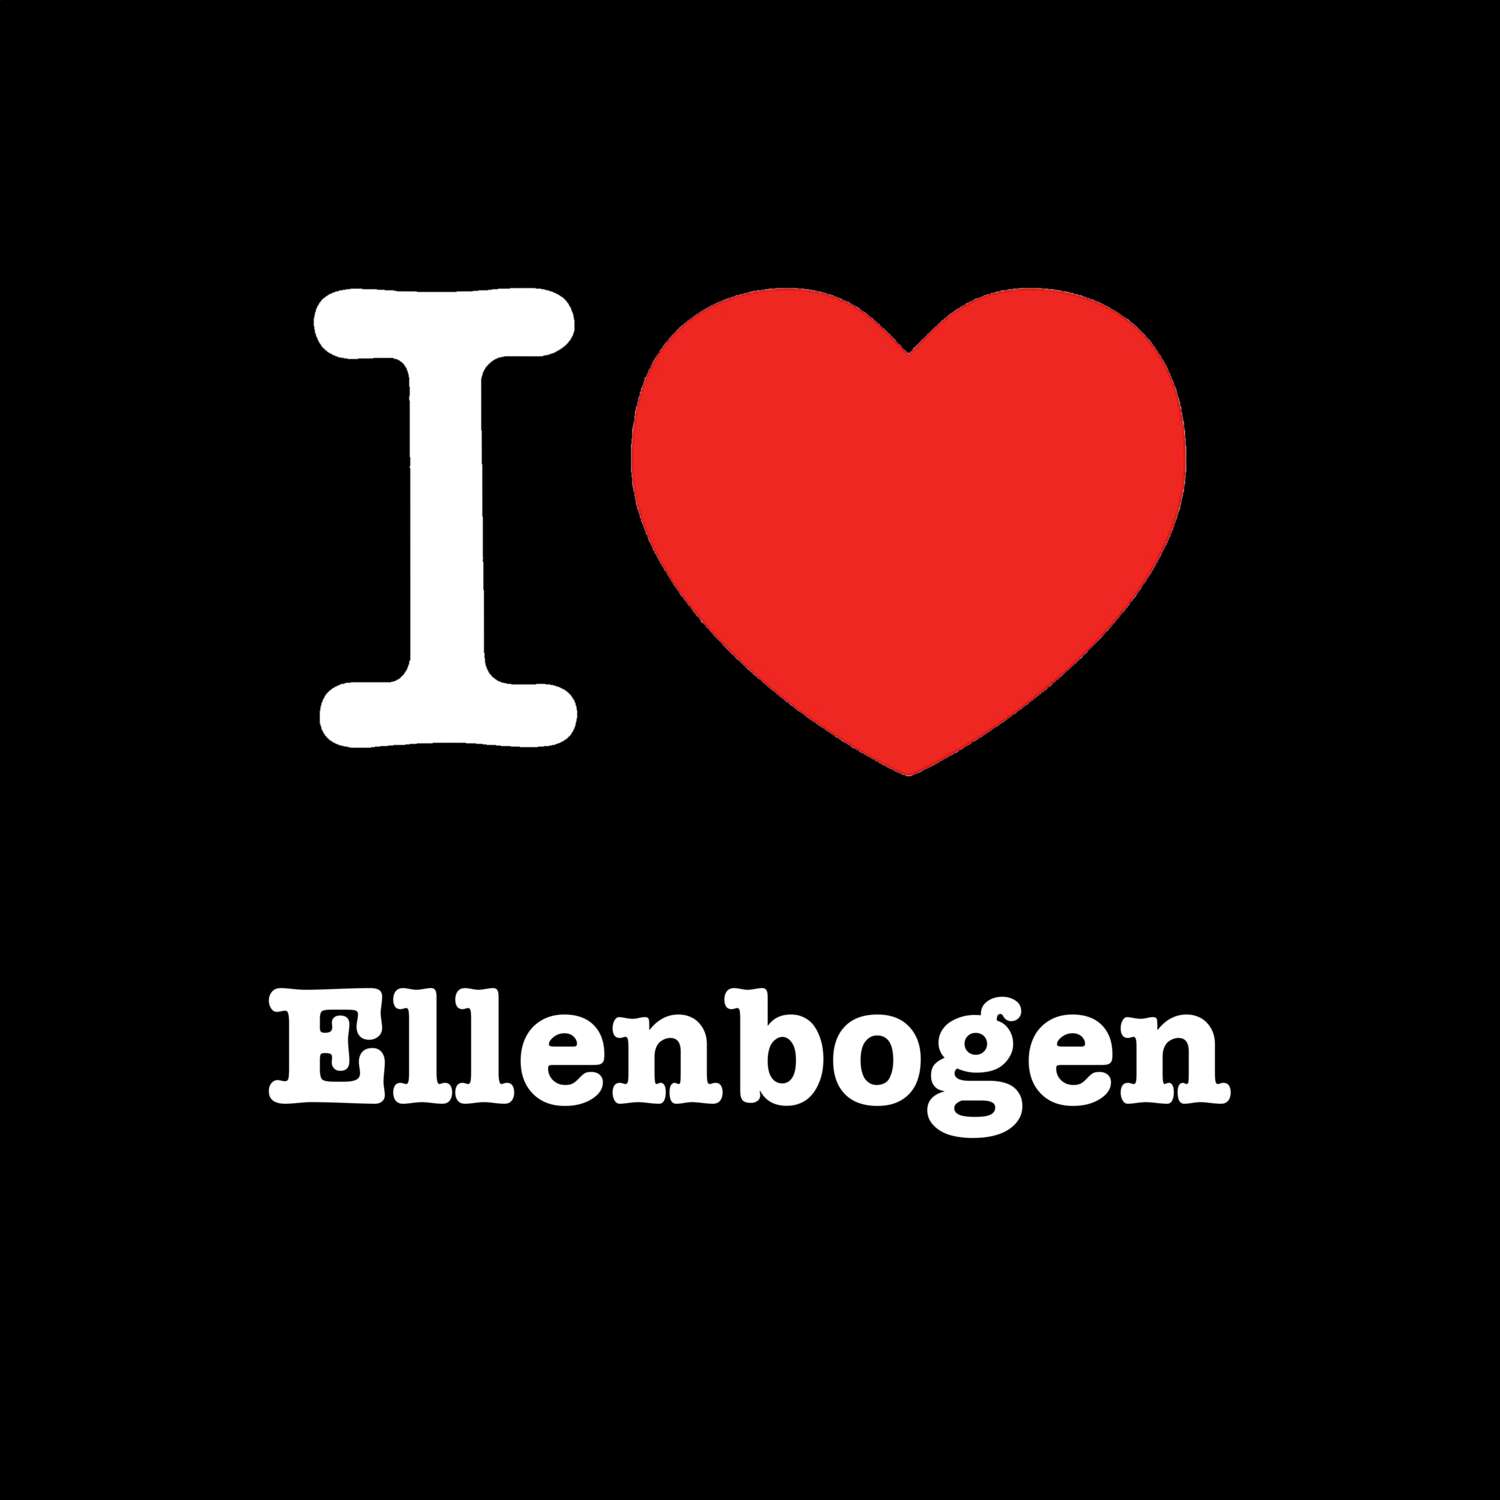 Ellenbogen T-Shirt »I love«